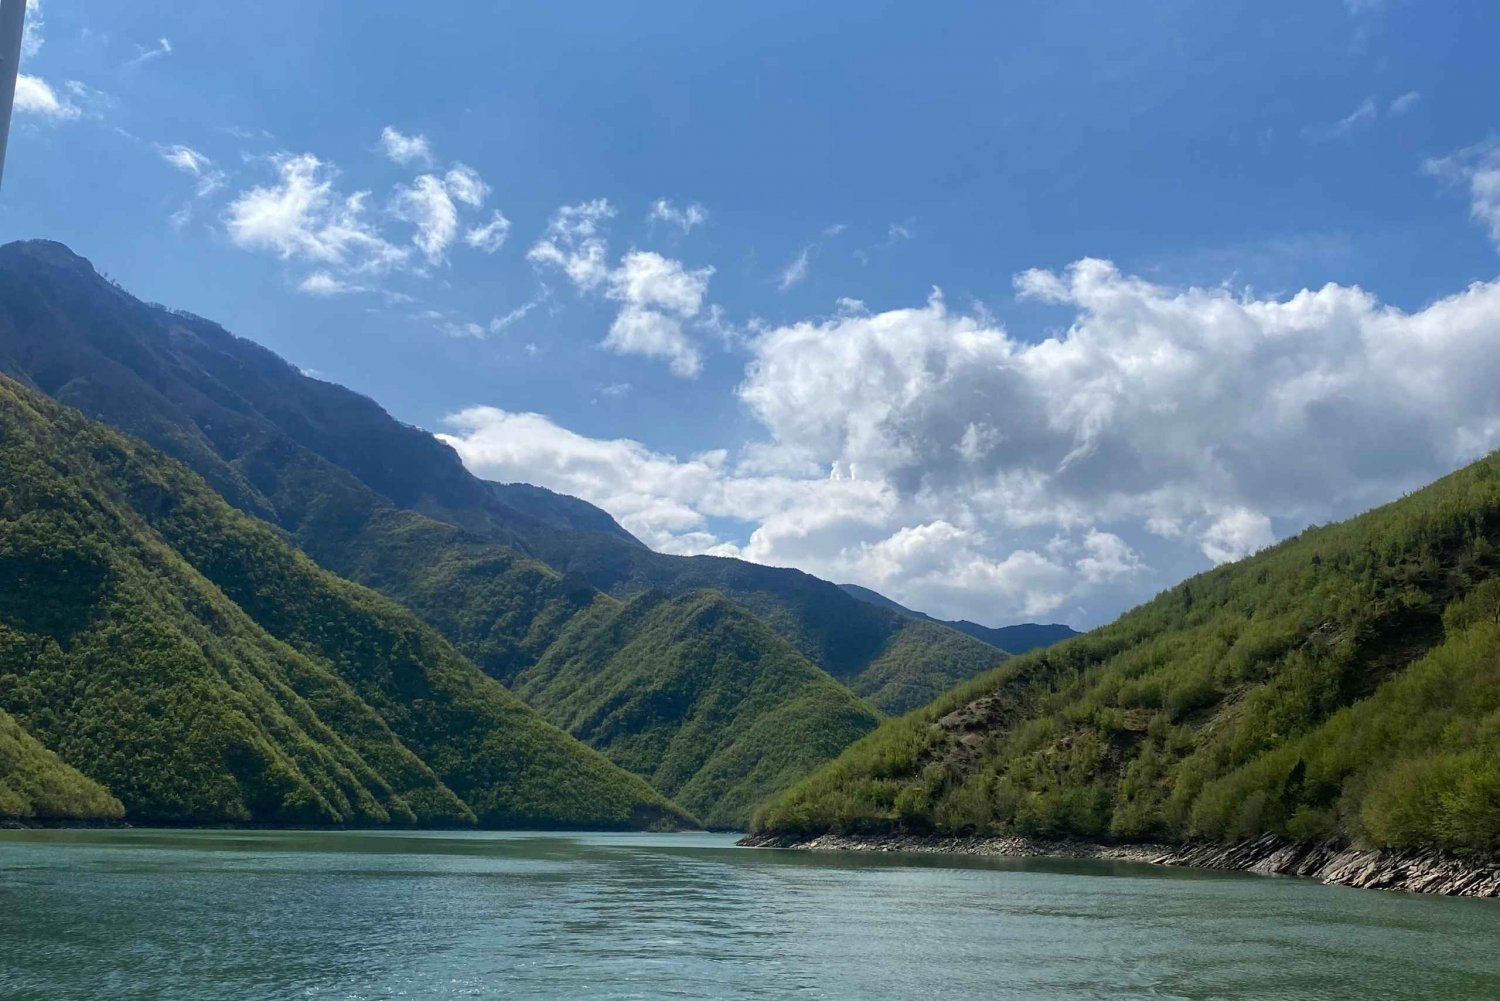 De Tirana, visite o lago Komani e o rio Shala